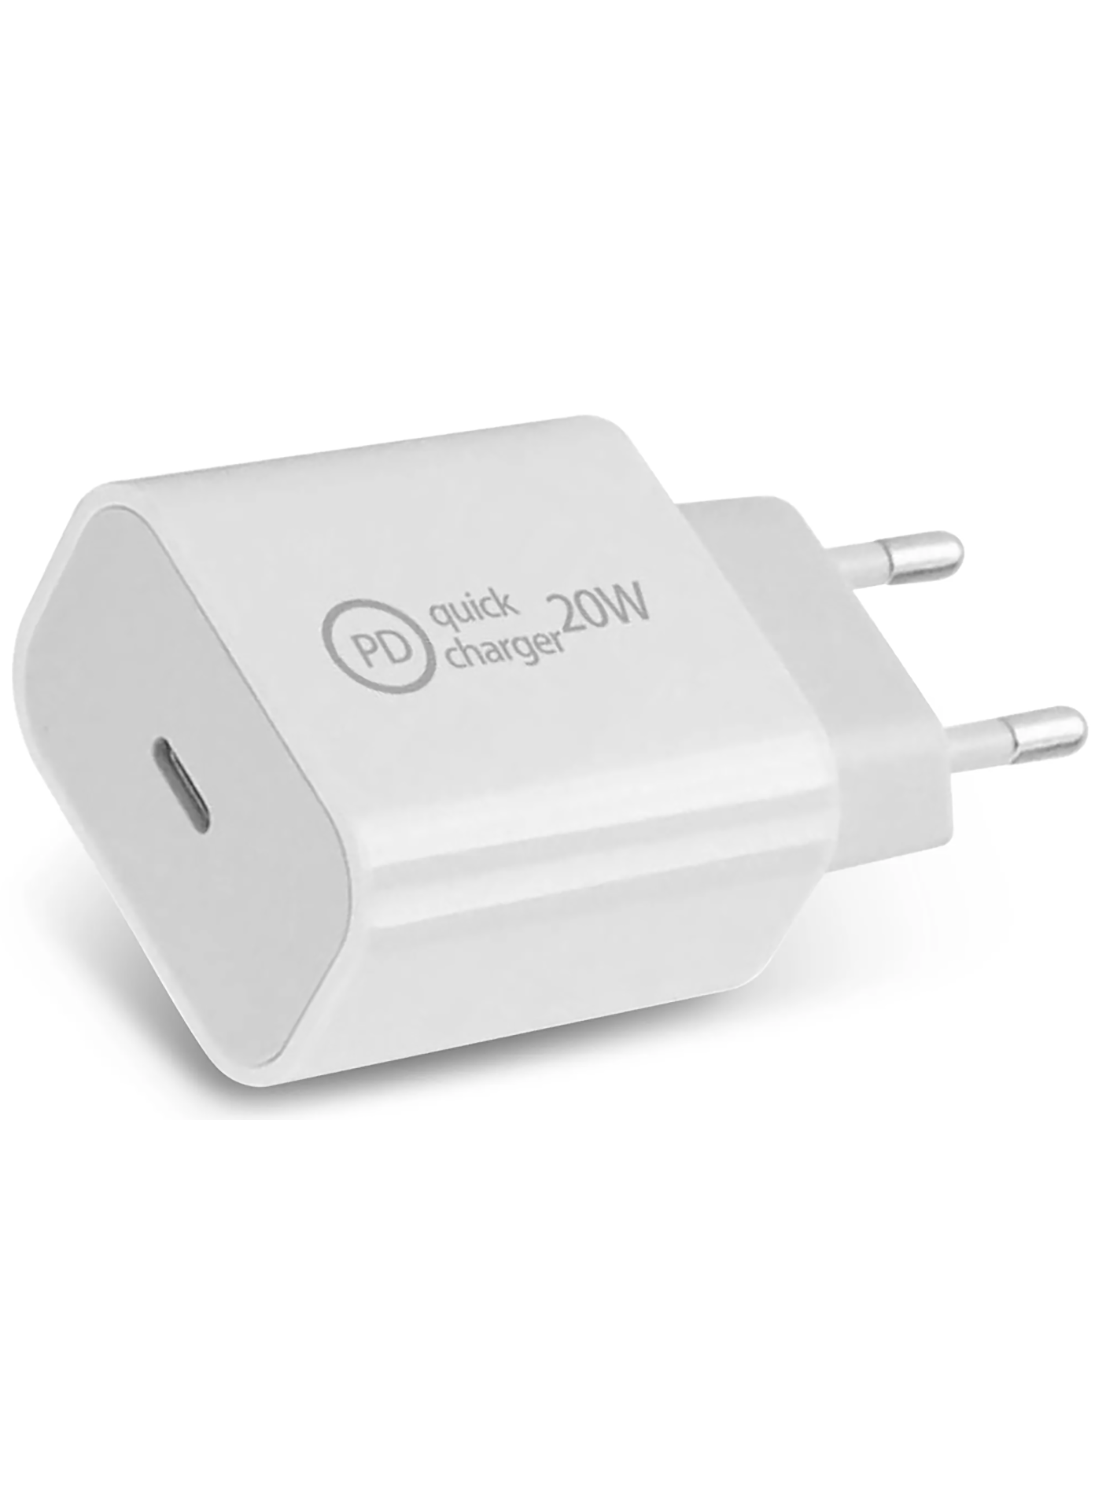 Schnellladegerät Netzteil 20W USB Typ C Power Charger Adapter